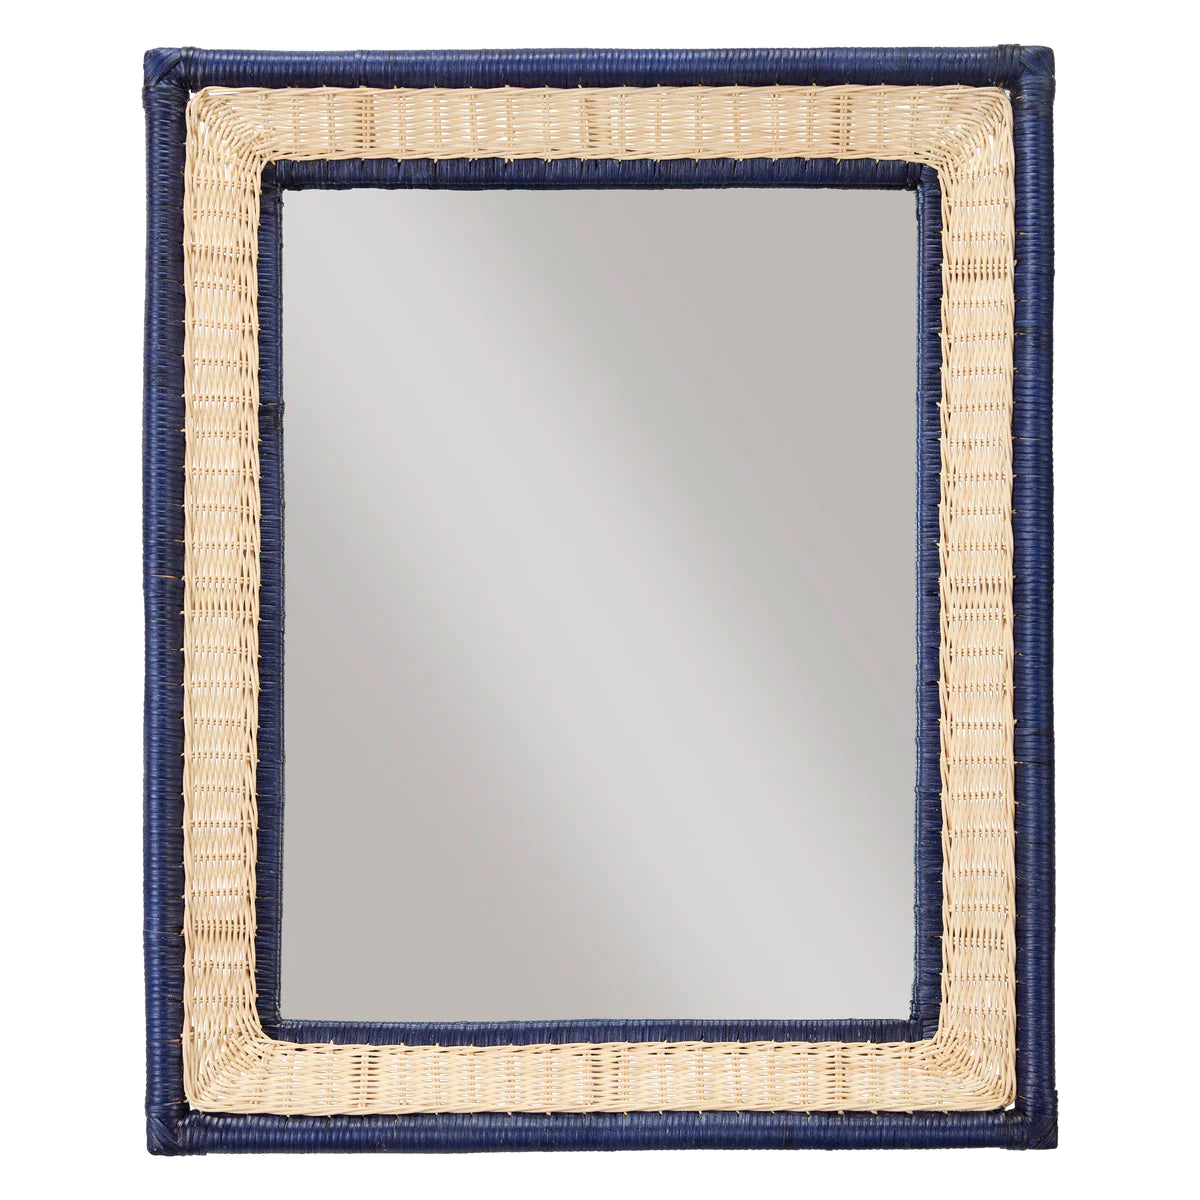 26 Rattan Round Bathroom Mirror - Boho Mirror for Nursery Wall Decor -  Handmade Wicker Rattan Mirrors for Wall with Rustic Design - Add Farmhouse  Elegance to Your Home Decor by Barnyard Designs